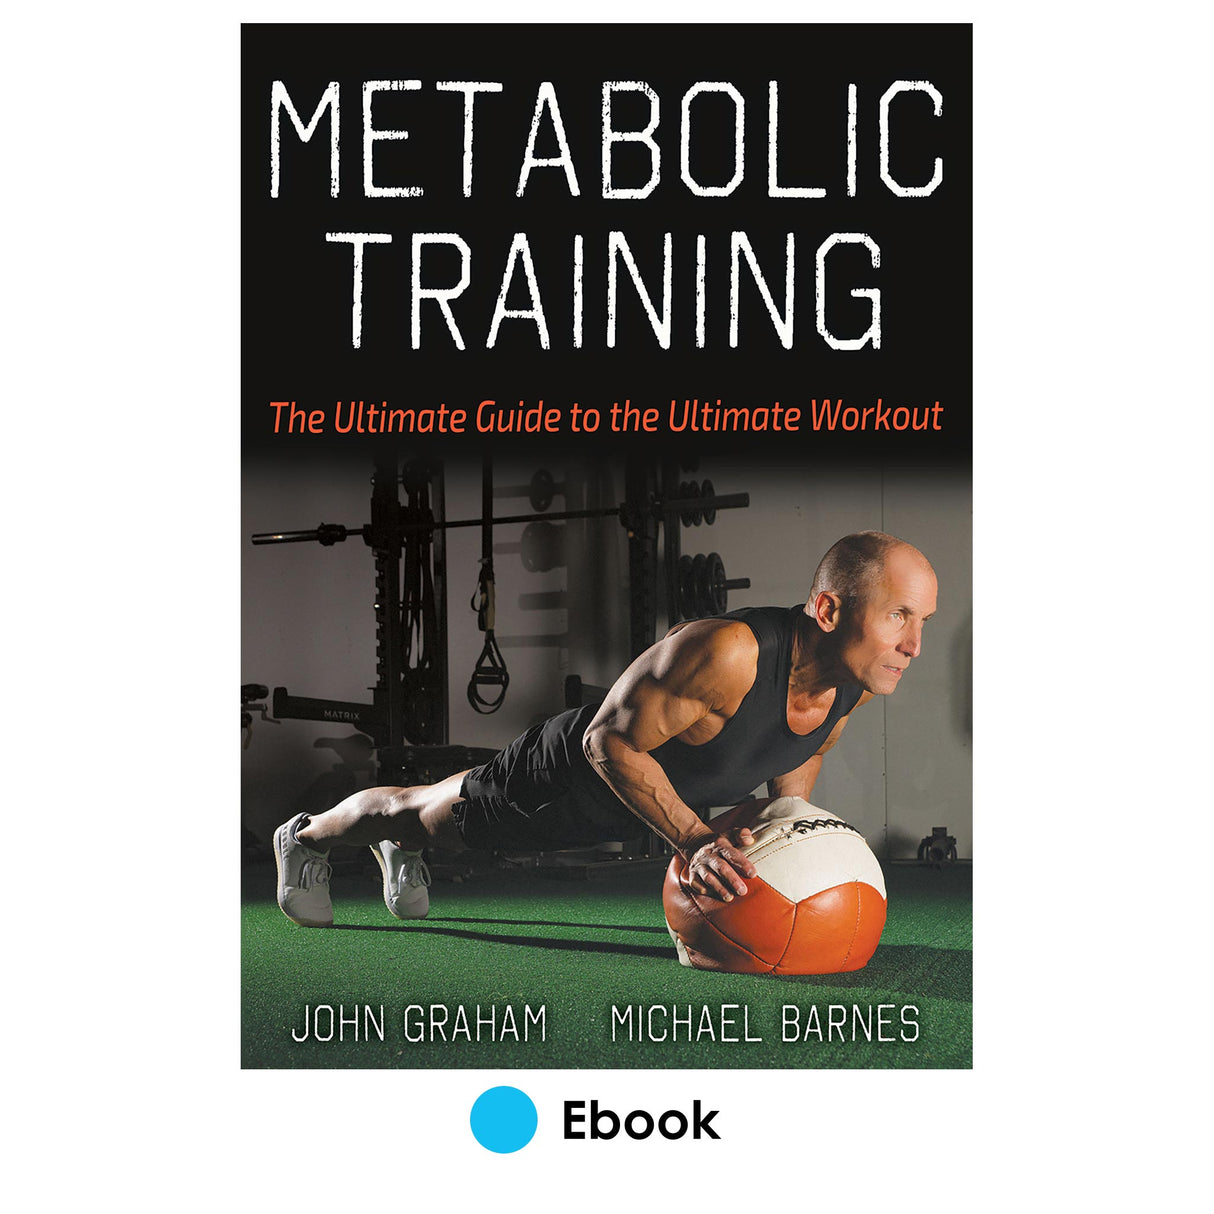 Metabolic Training epub